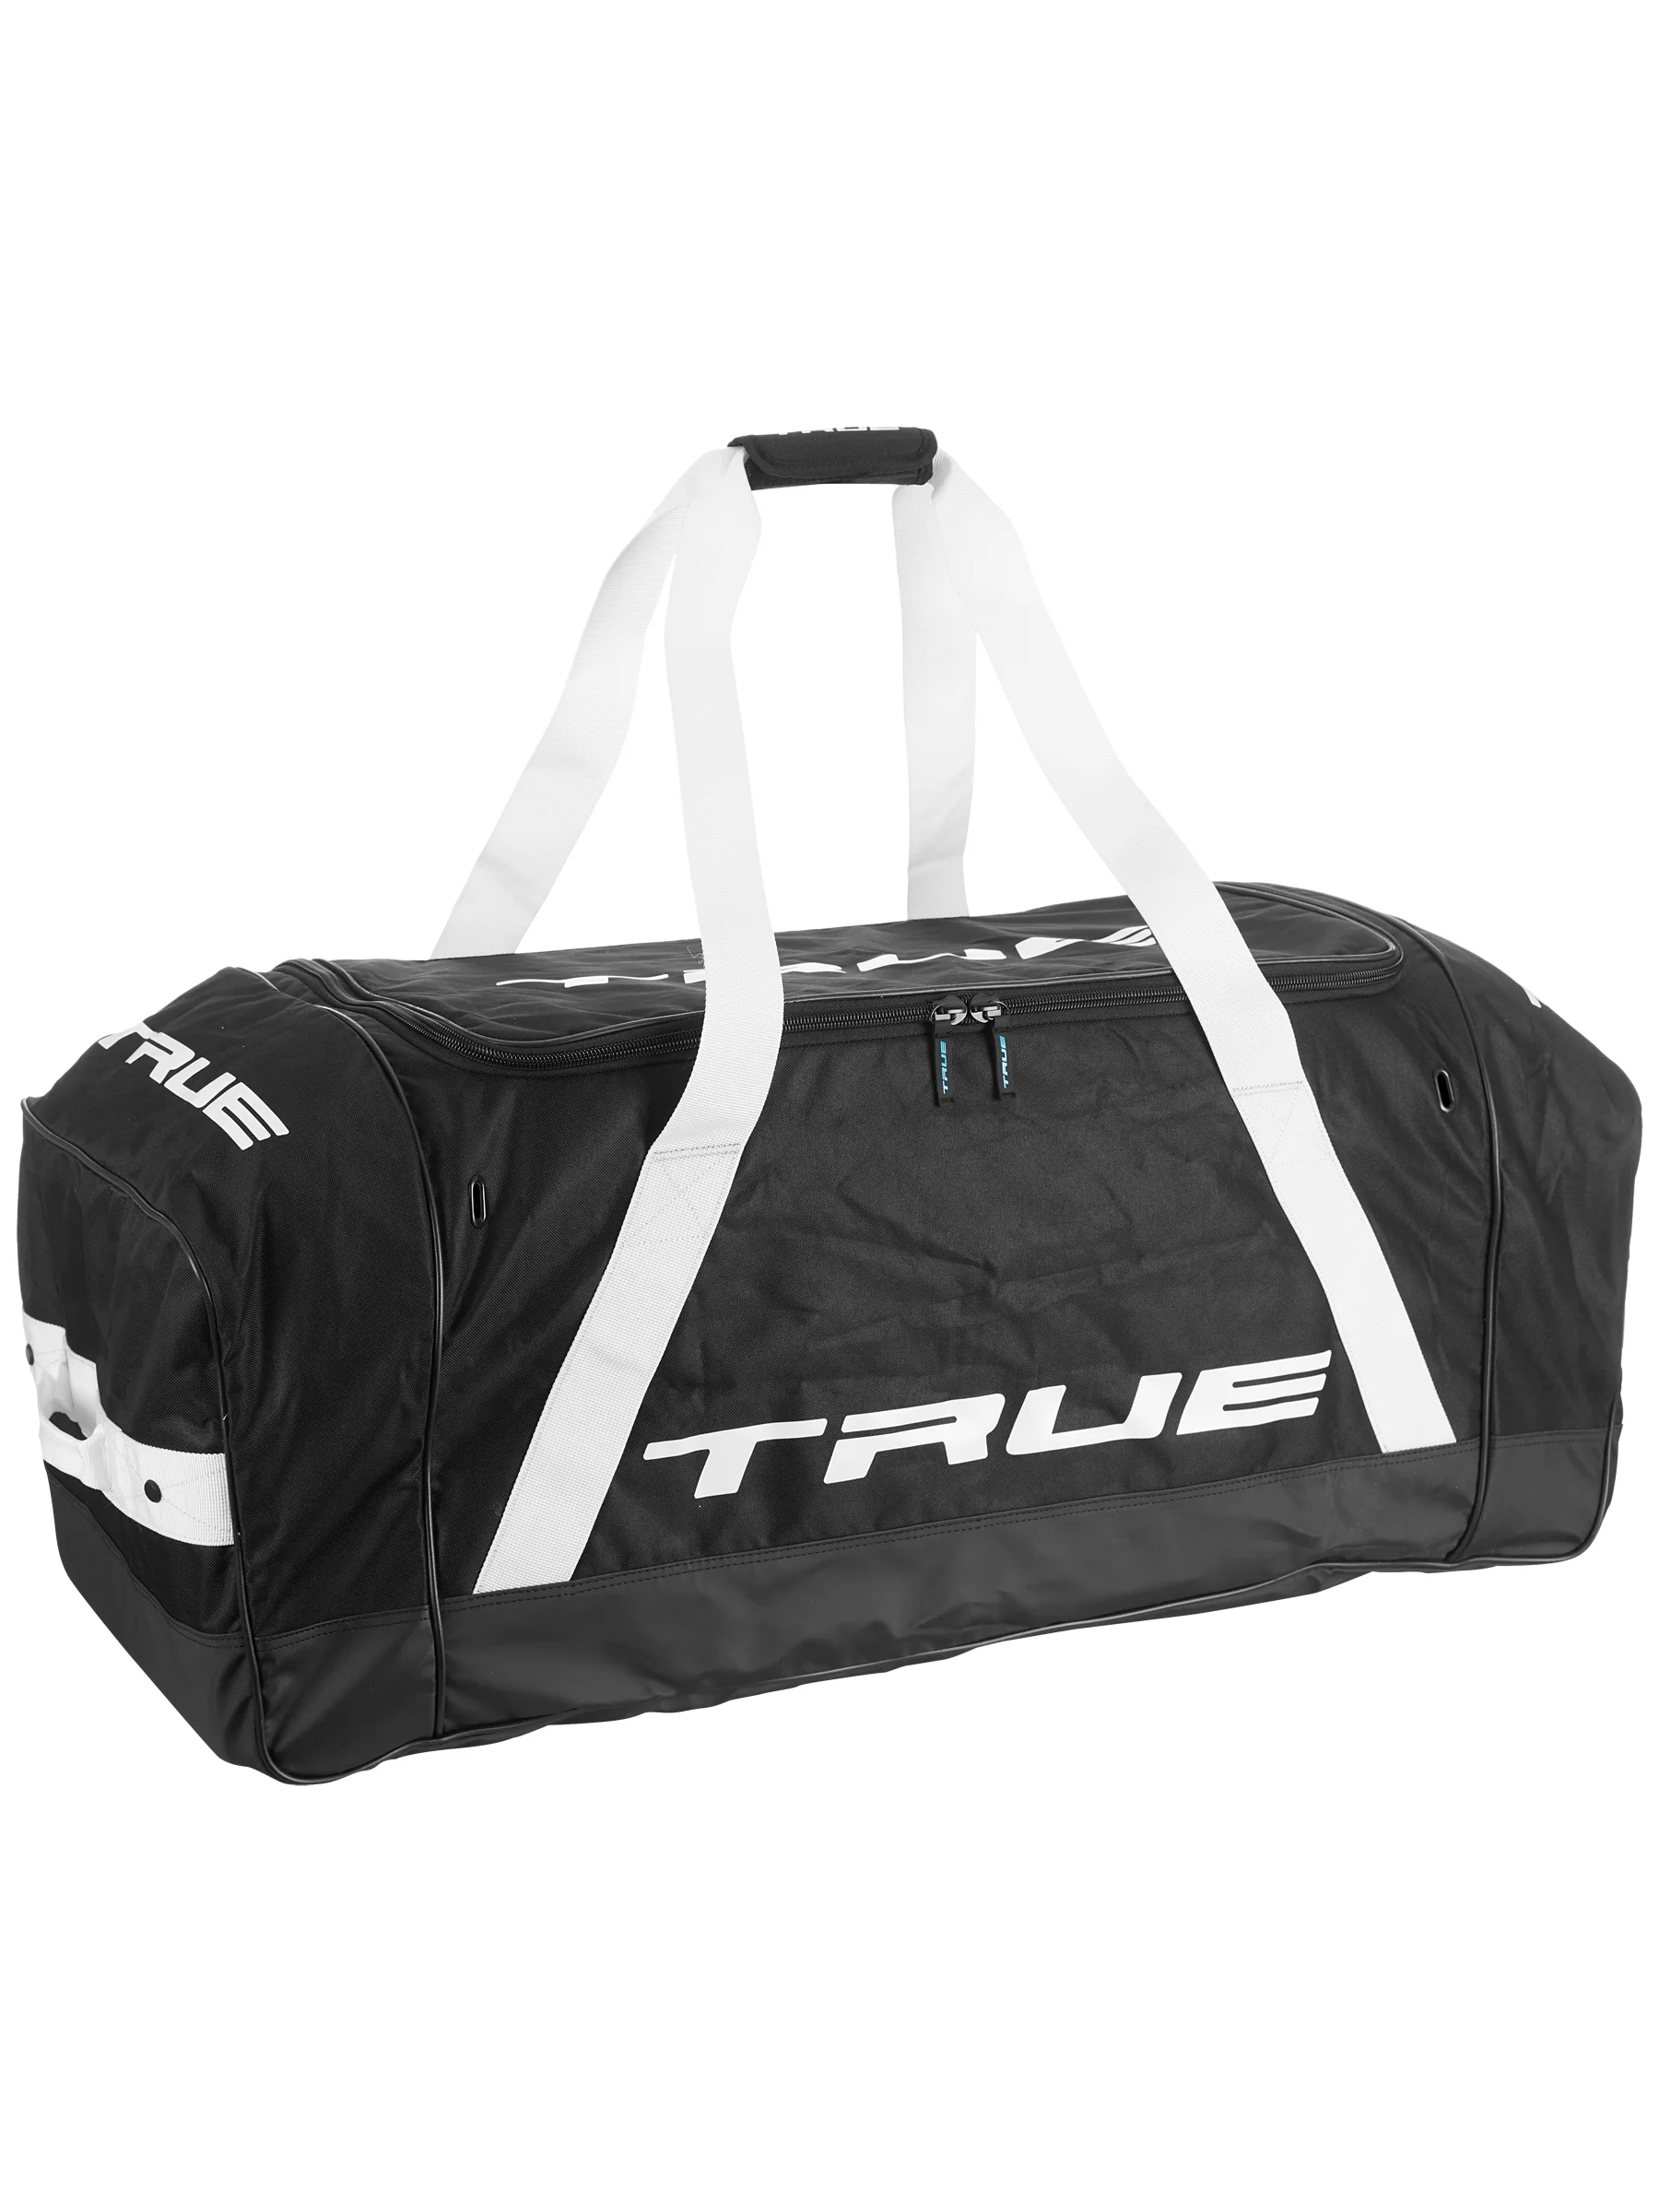 TRUE Core Carry S21 Senior Equipment Bag